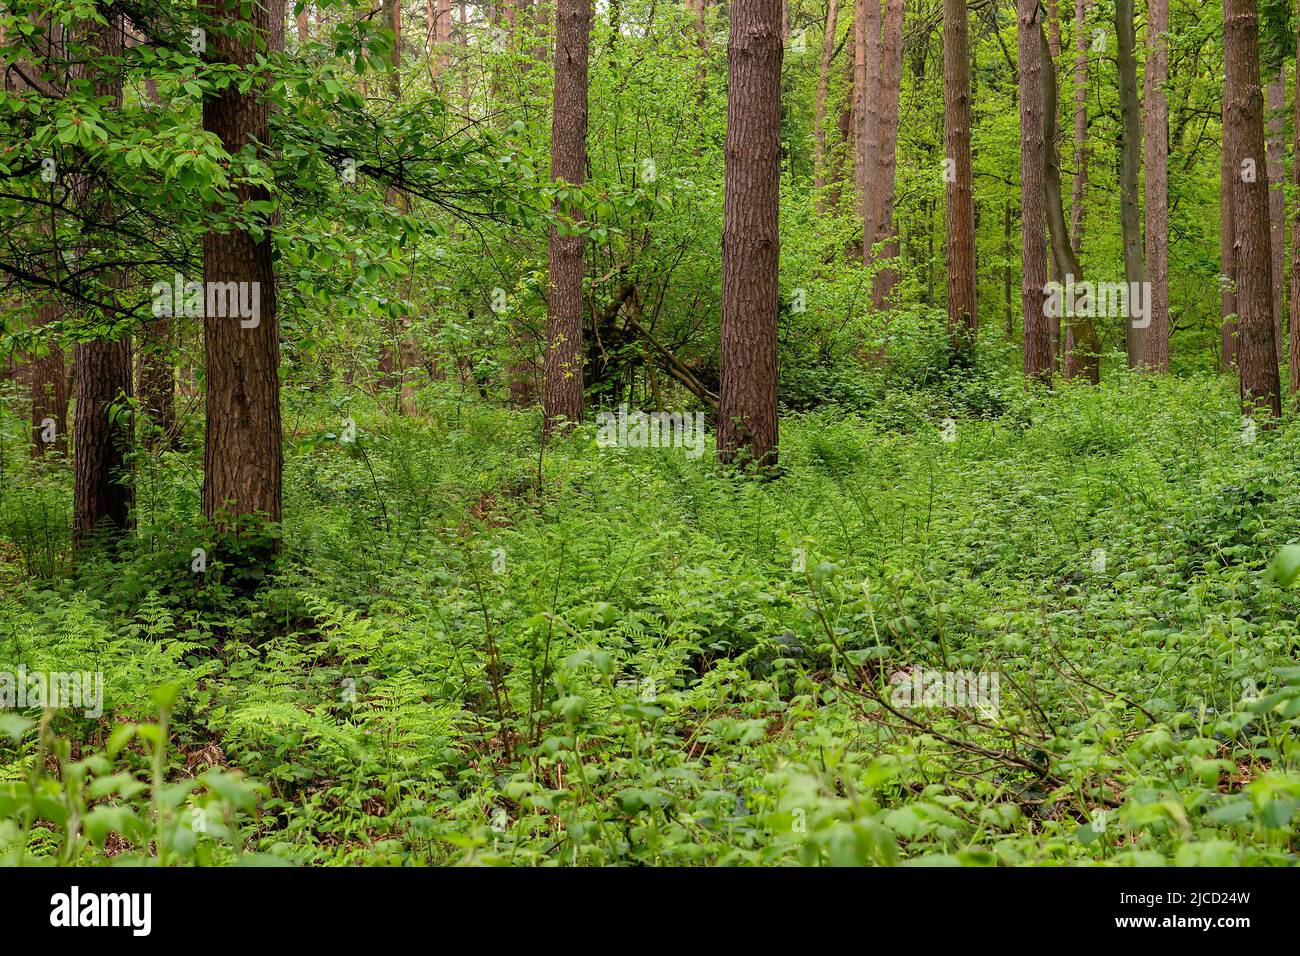 Green springtime forest, stock photo Stock Photo